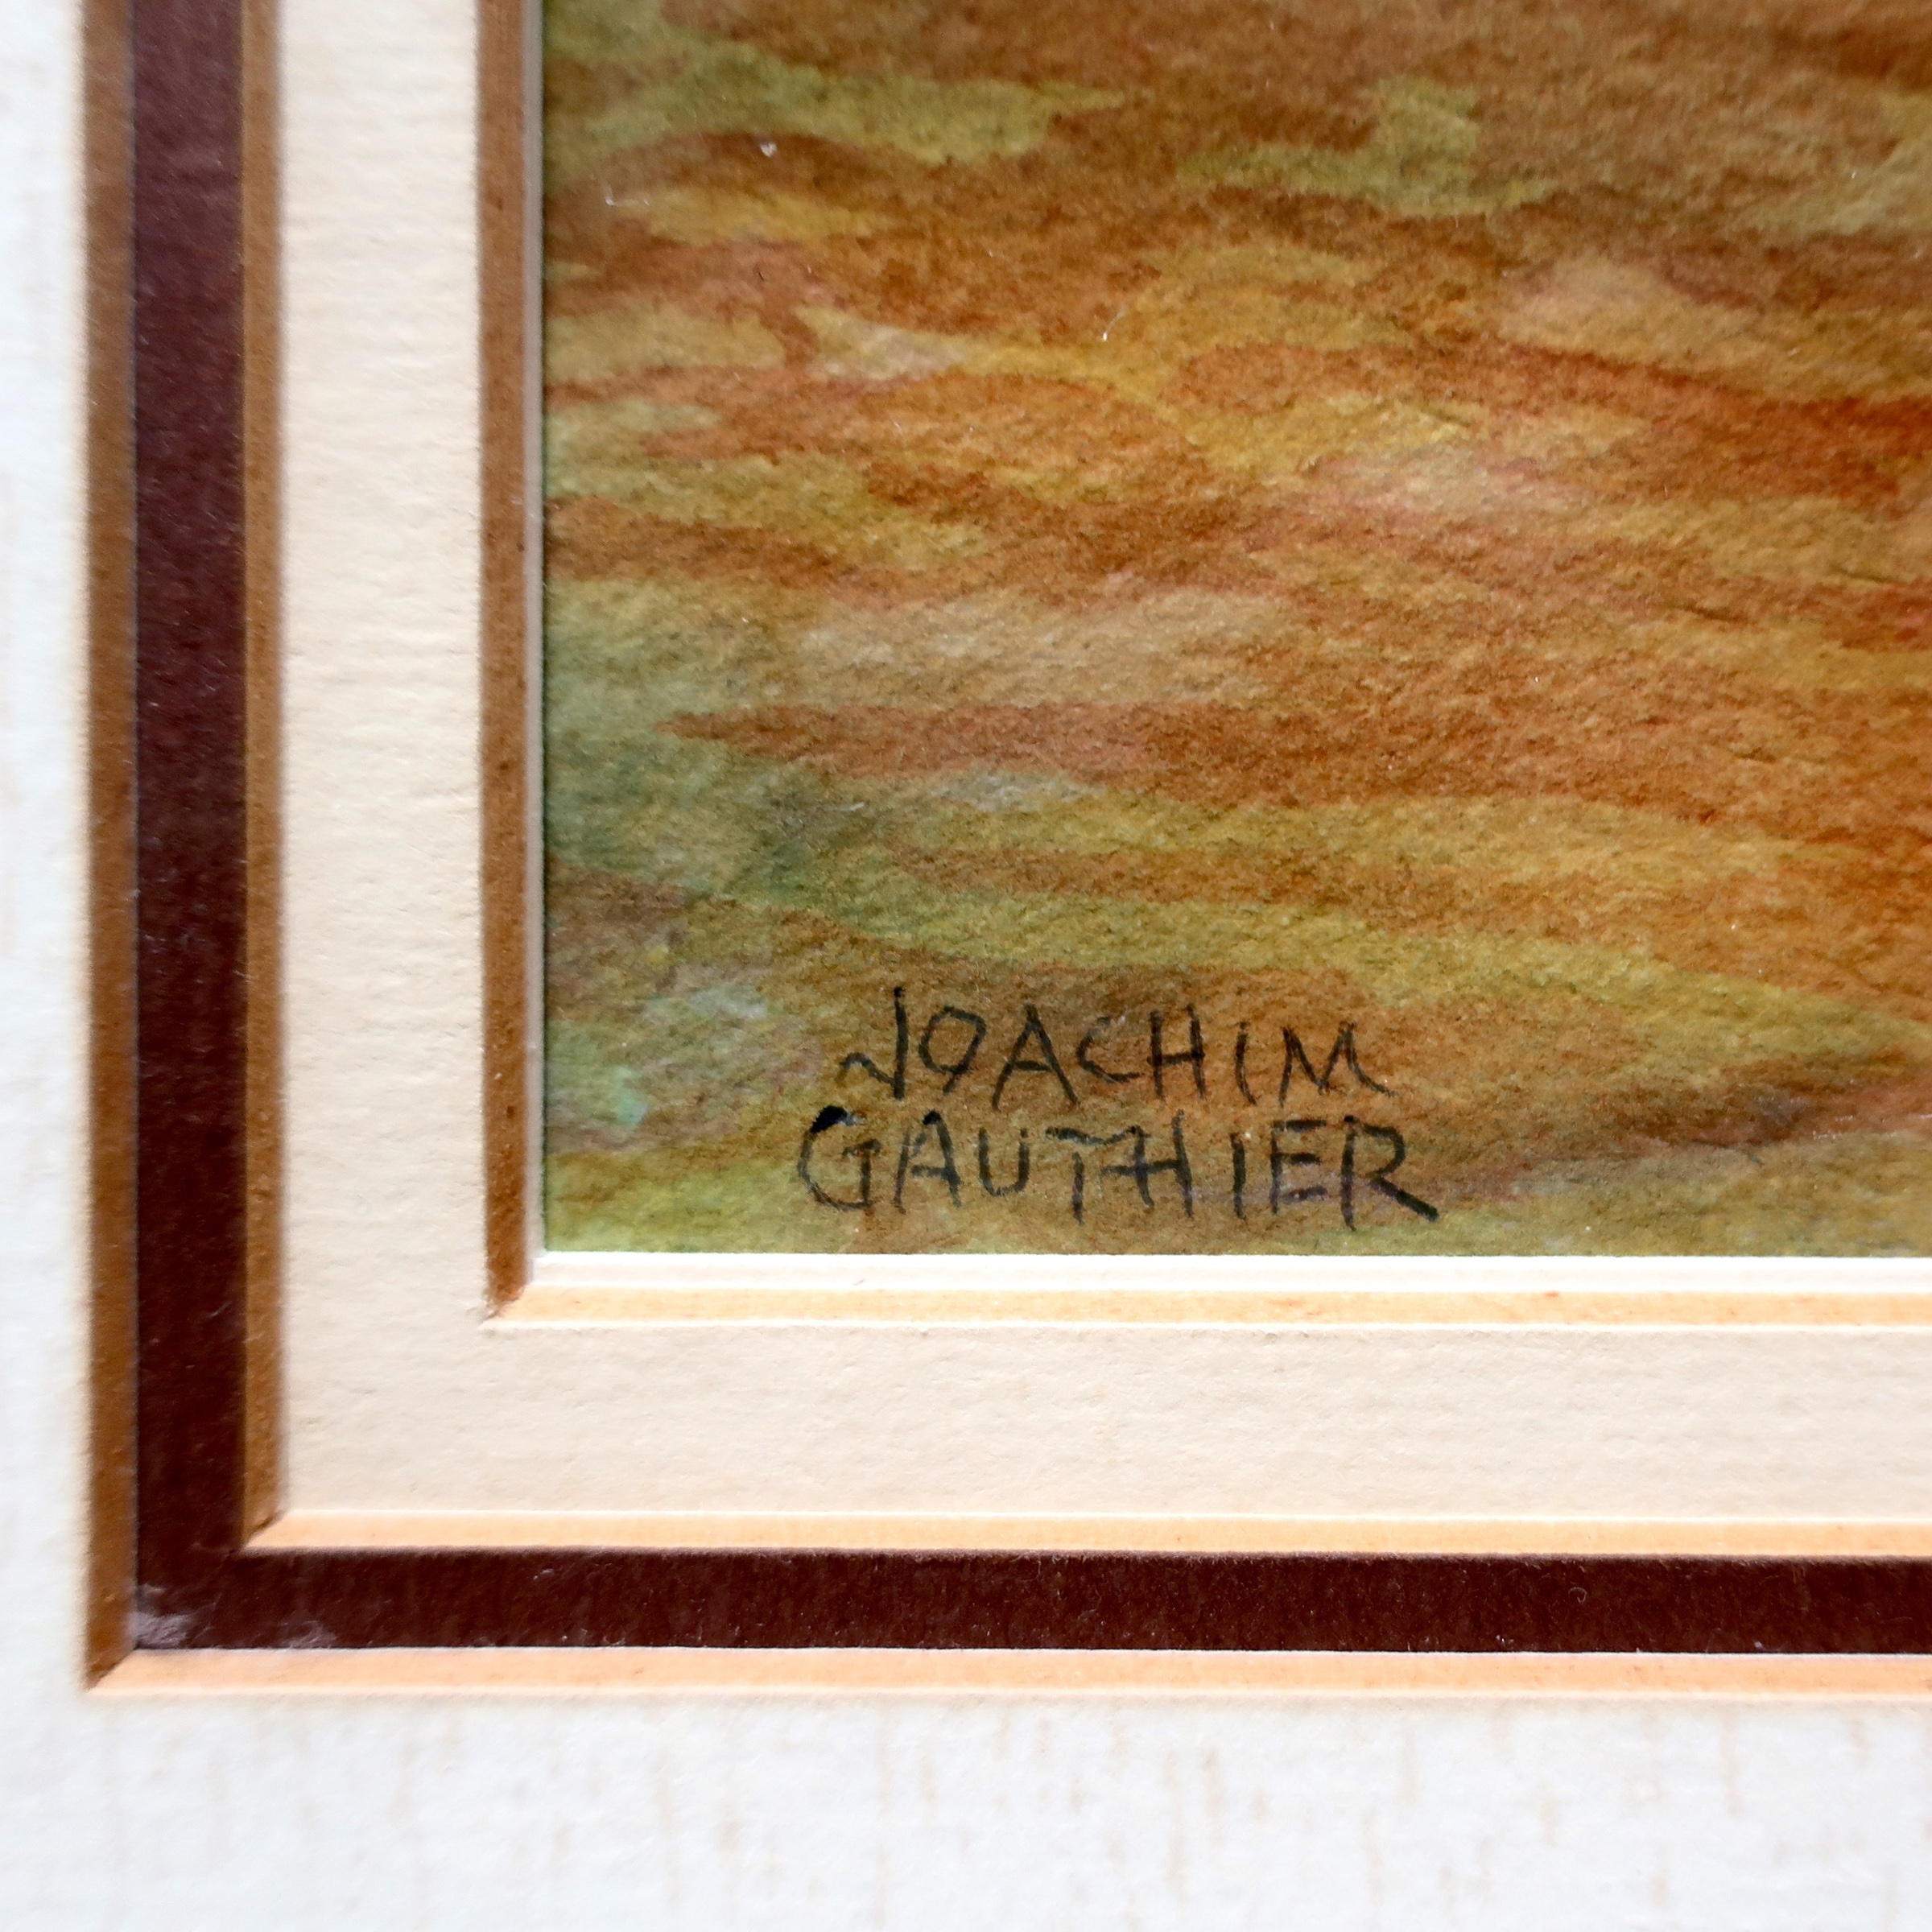 JOACHIM GEORGE GAUTHIER (CANADIAN, 1897-1998)